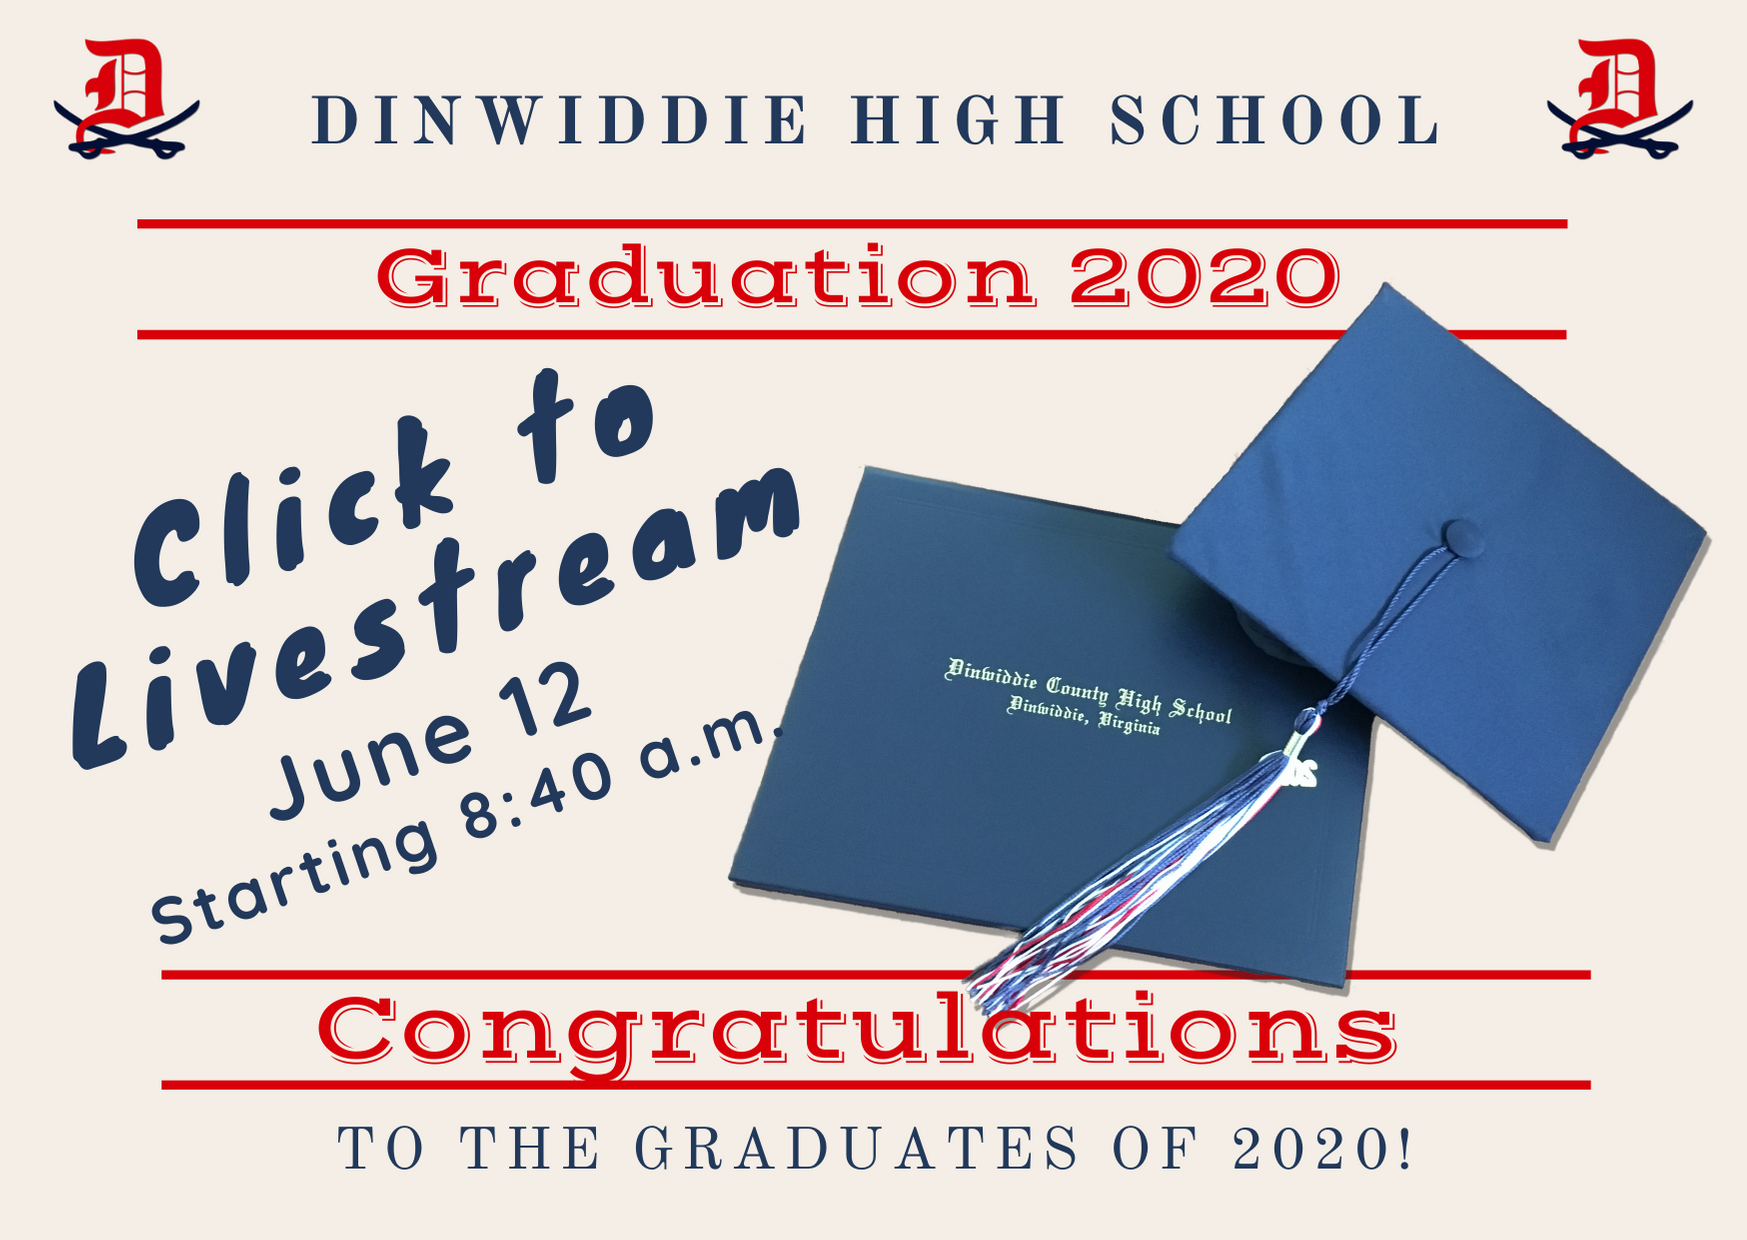 DHS Graduation 2020